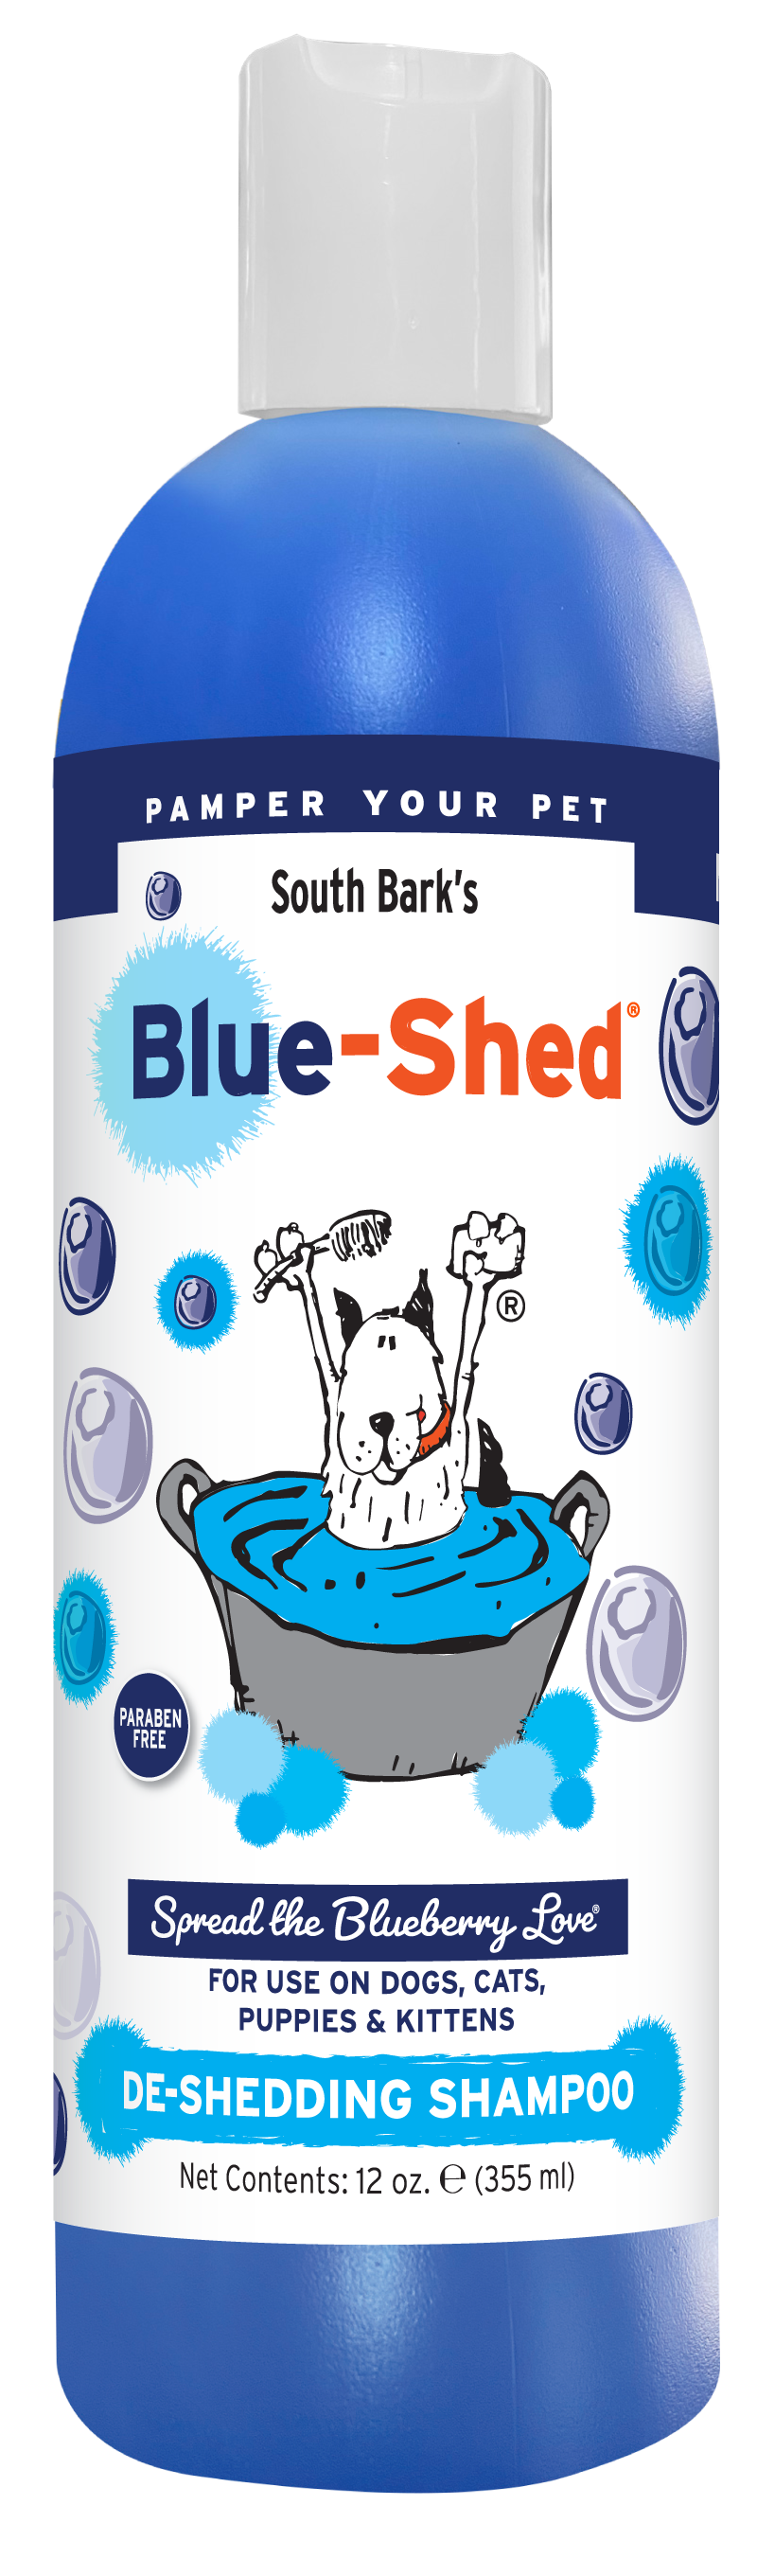 South Bark Blue-Shed® Brightening and Deshedding Shampoo